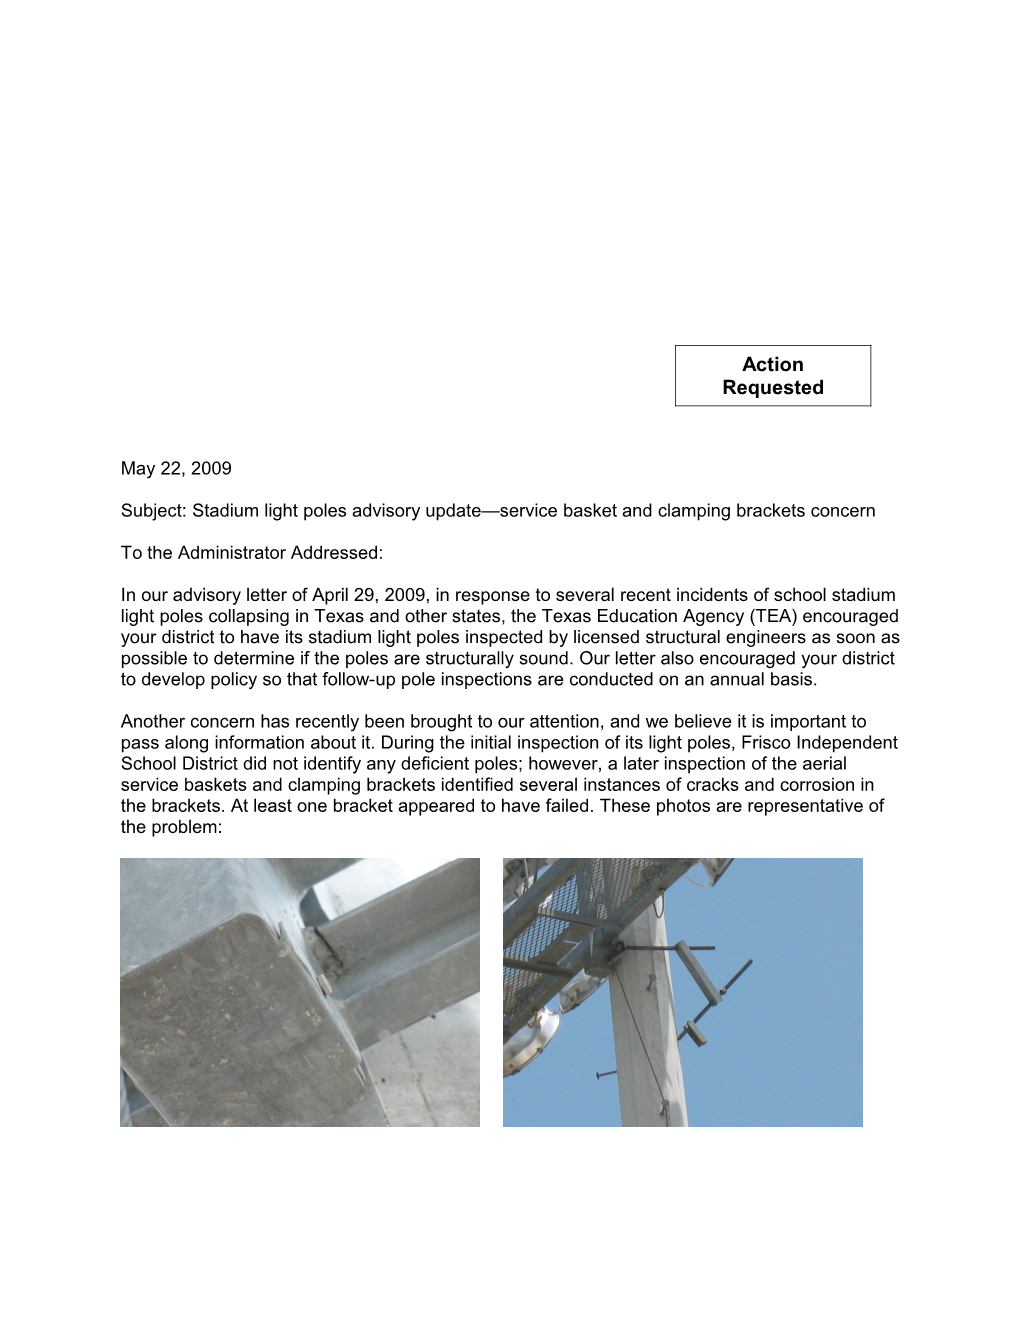 Subject: Stadium Light Poles Advisory Update Service Basket and Clamping Brackets Concern